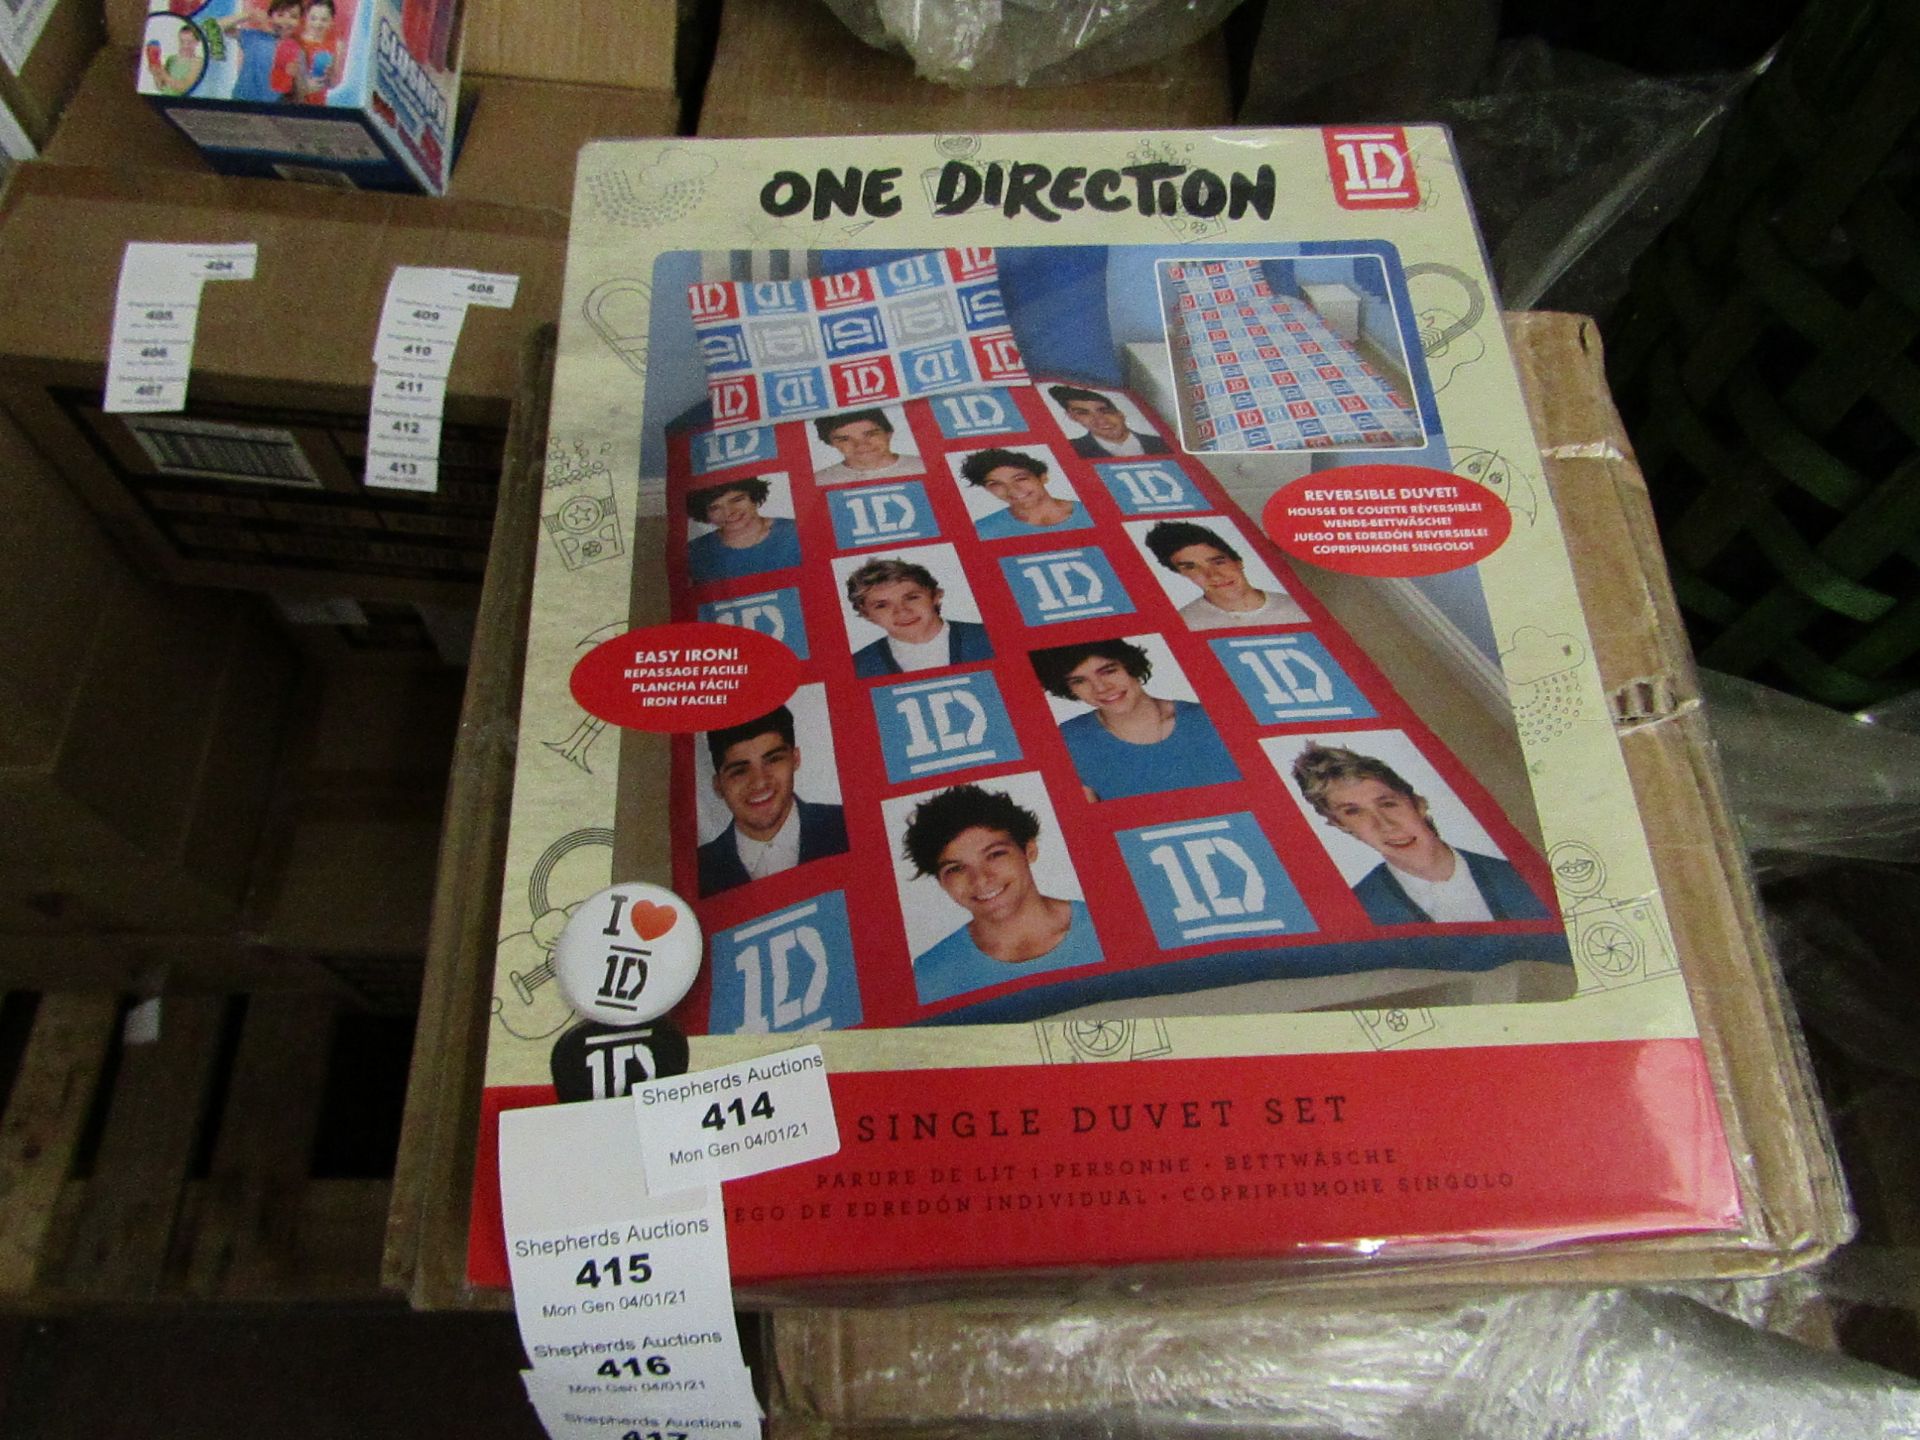 6x One Direction - Duvet Set Single - Unused & Packaged.